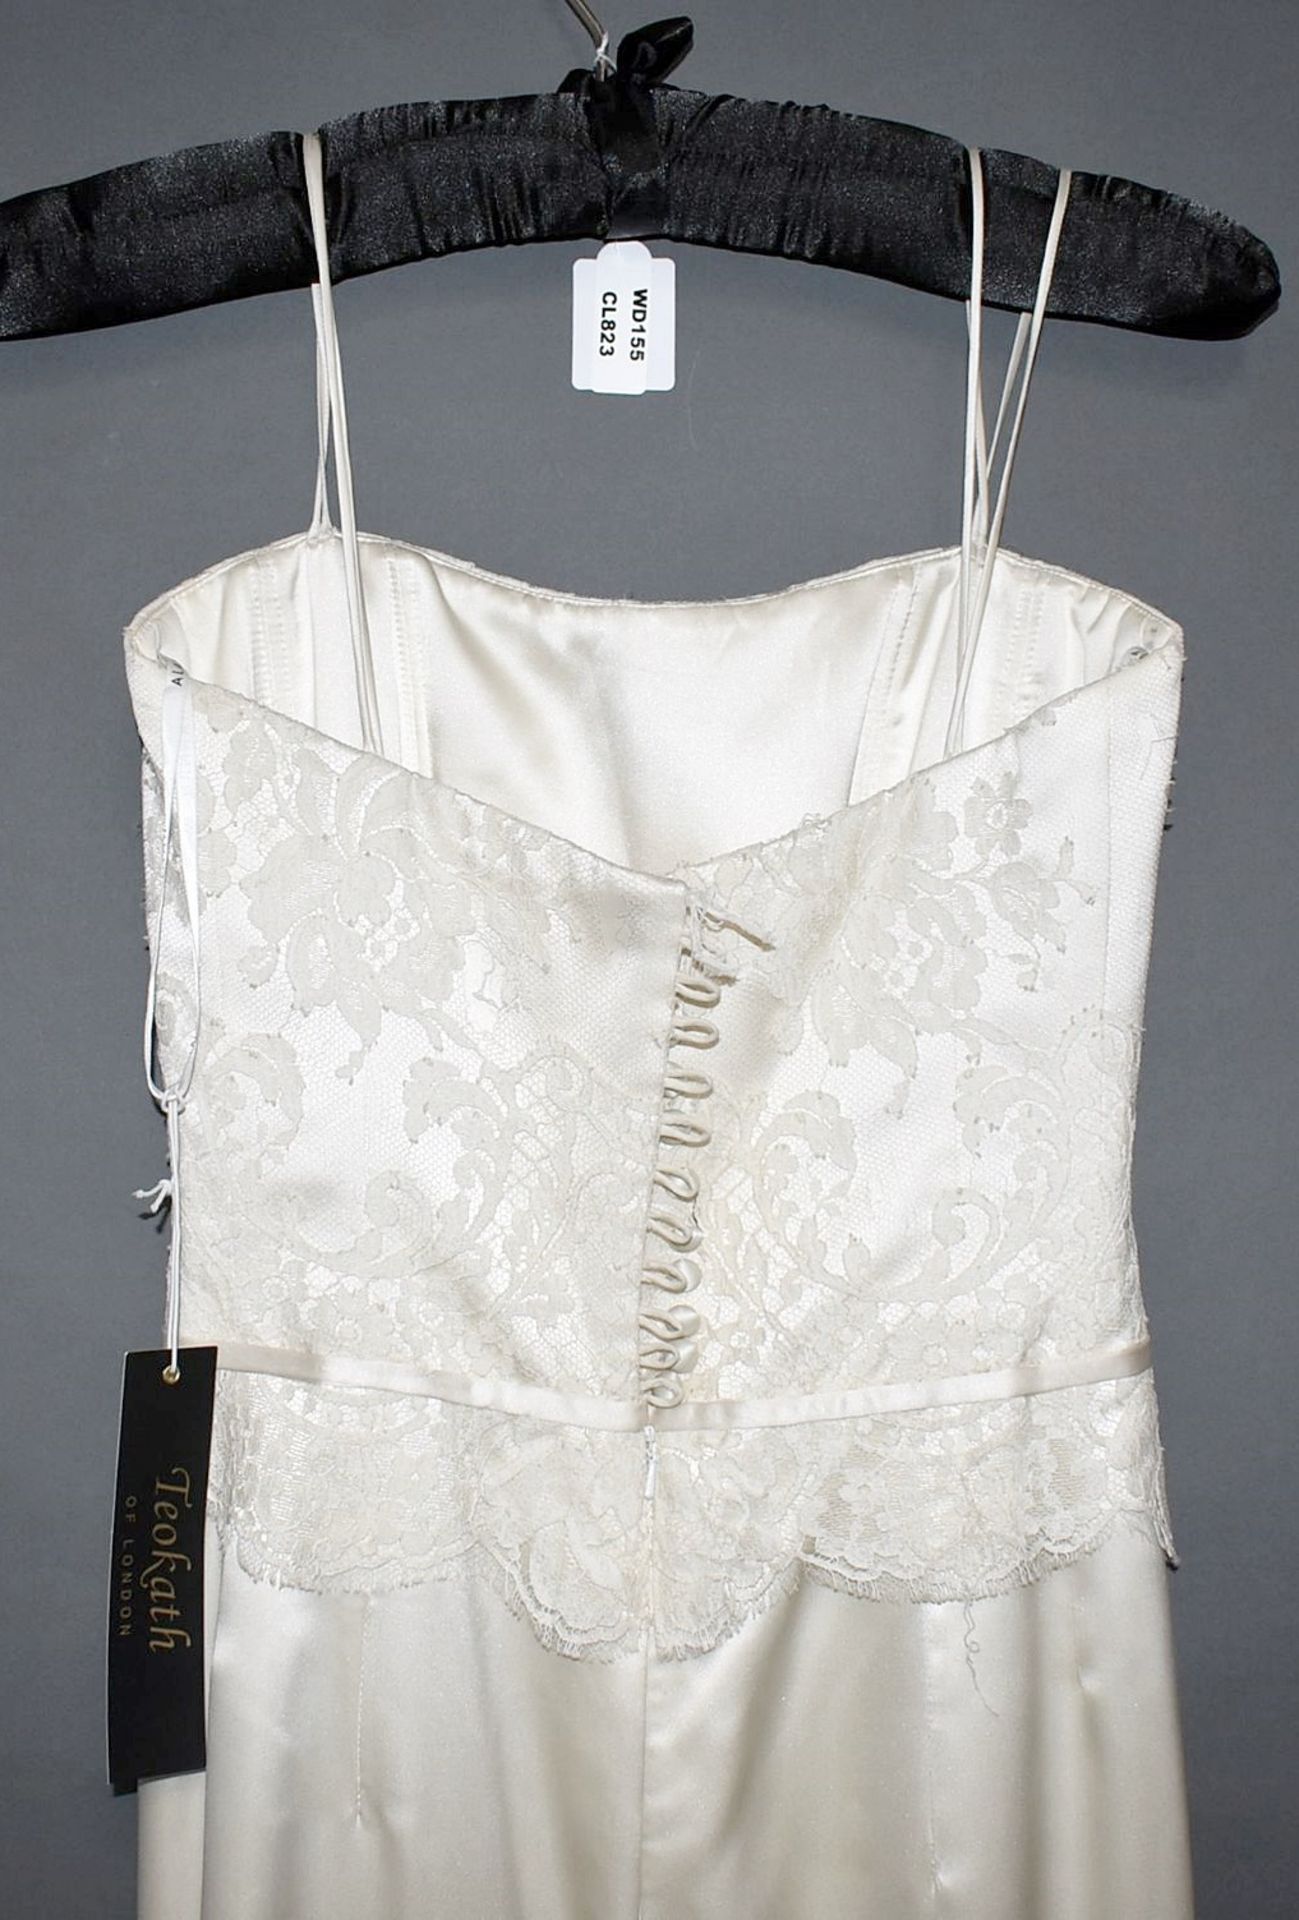 1 x ALAN HANNAH Strapless Lace Bodice Fishtail Designer Wedding Dress Bridal Gown RRP £1,900 UK12 - Image 5 of 6